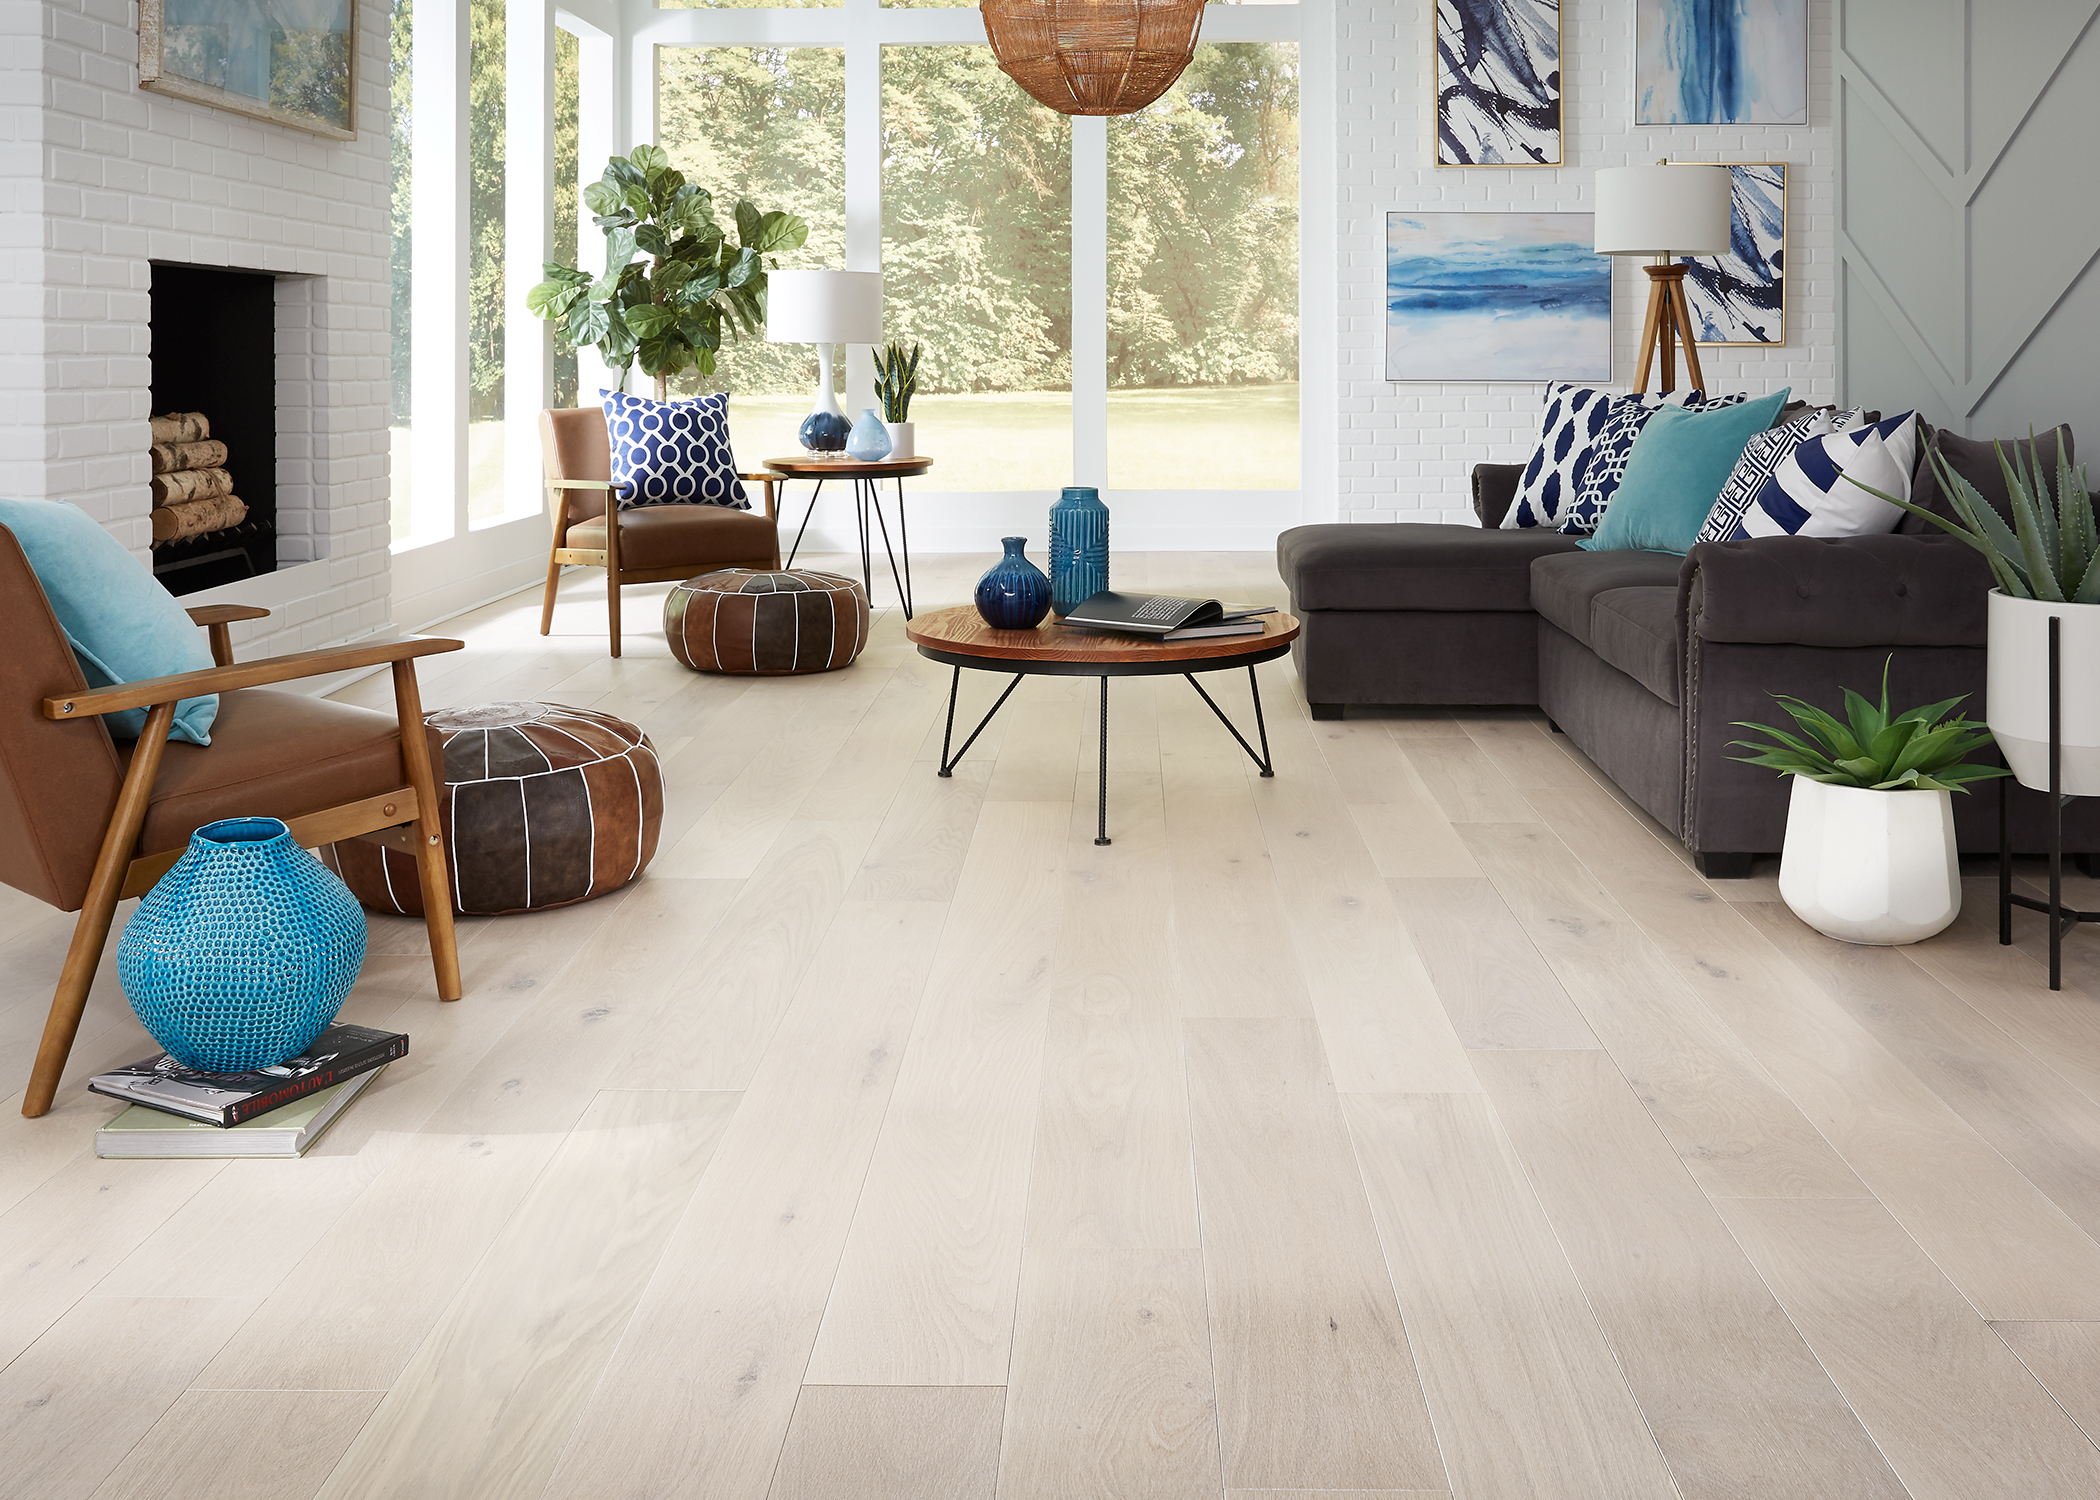 5/8 in. x 7.5 in. Barcelona White Oak Engineered Hardwood Flooring